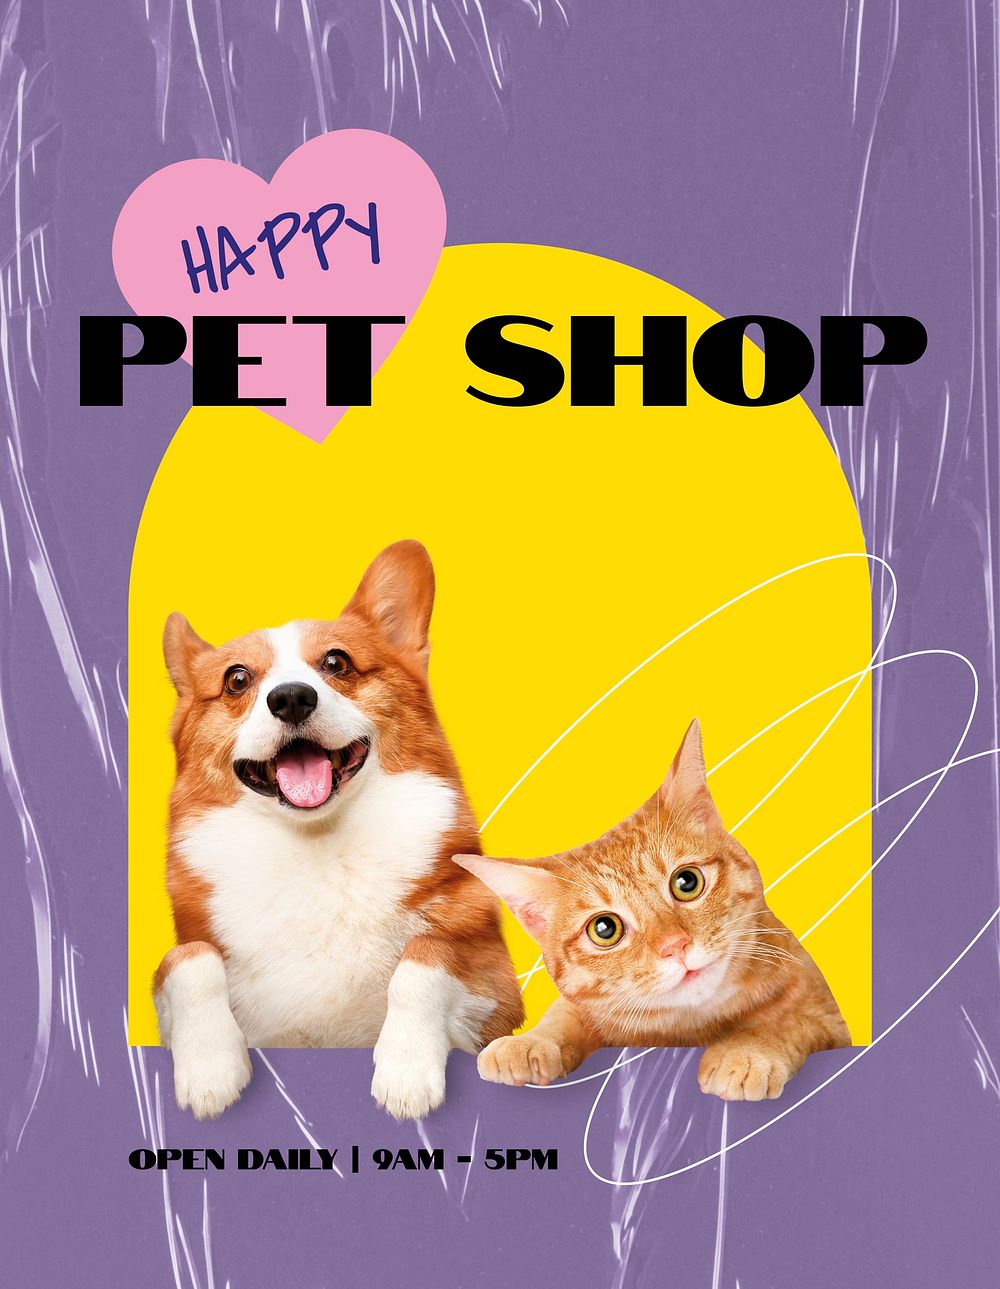 Pet shop flyer template, dog & cat photo vector